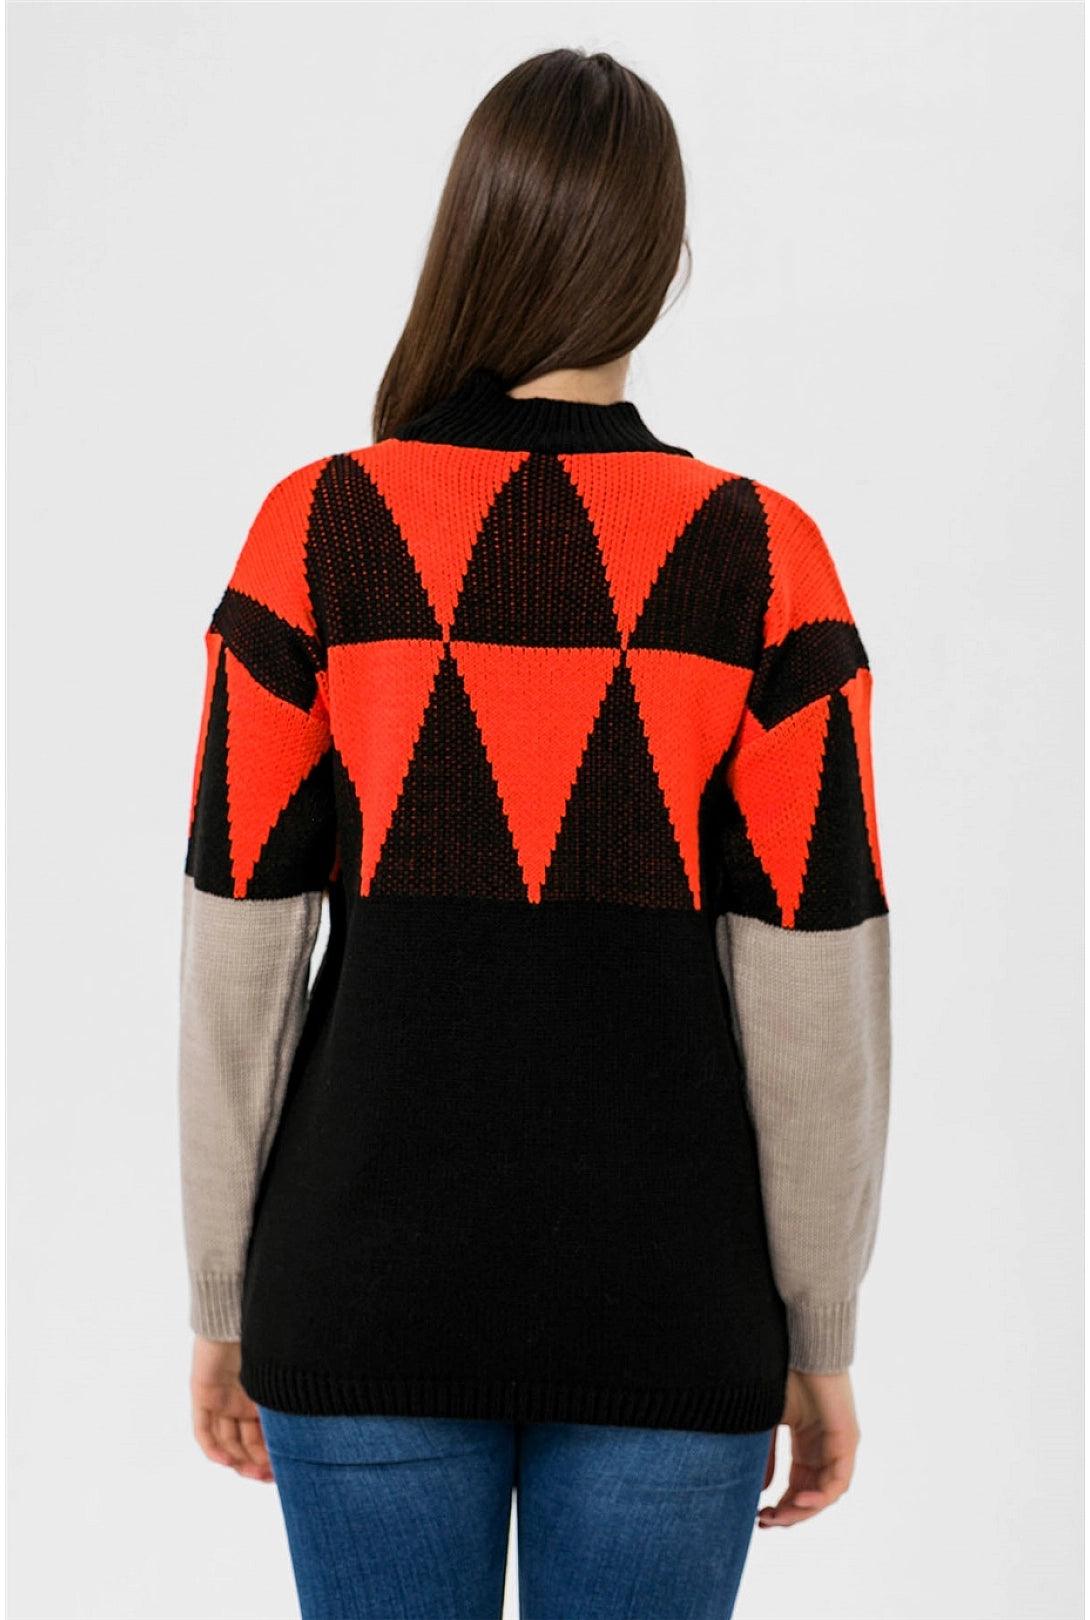 Triangle Patterned Womens Crew Neck Knitwear Sweater